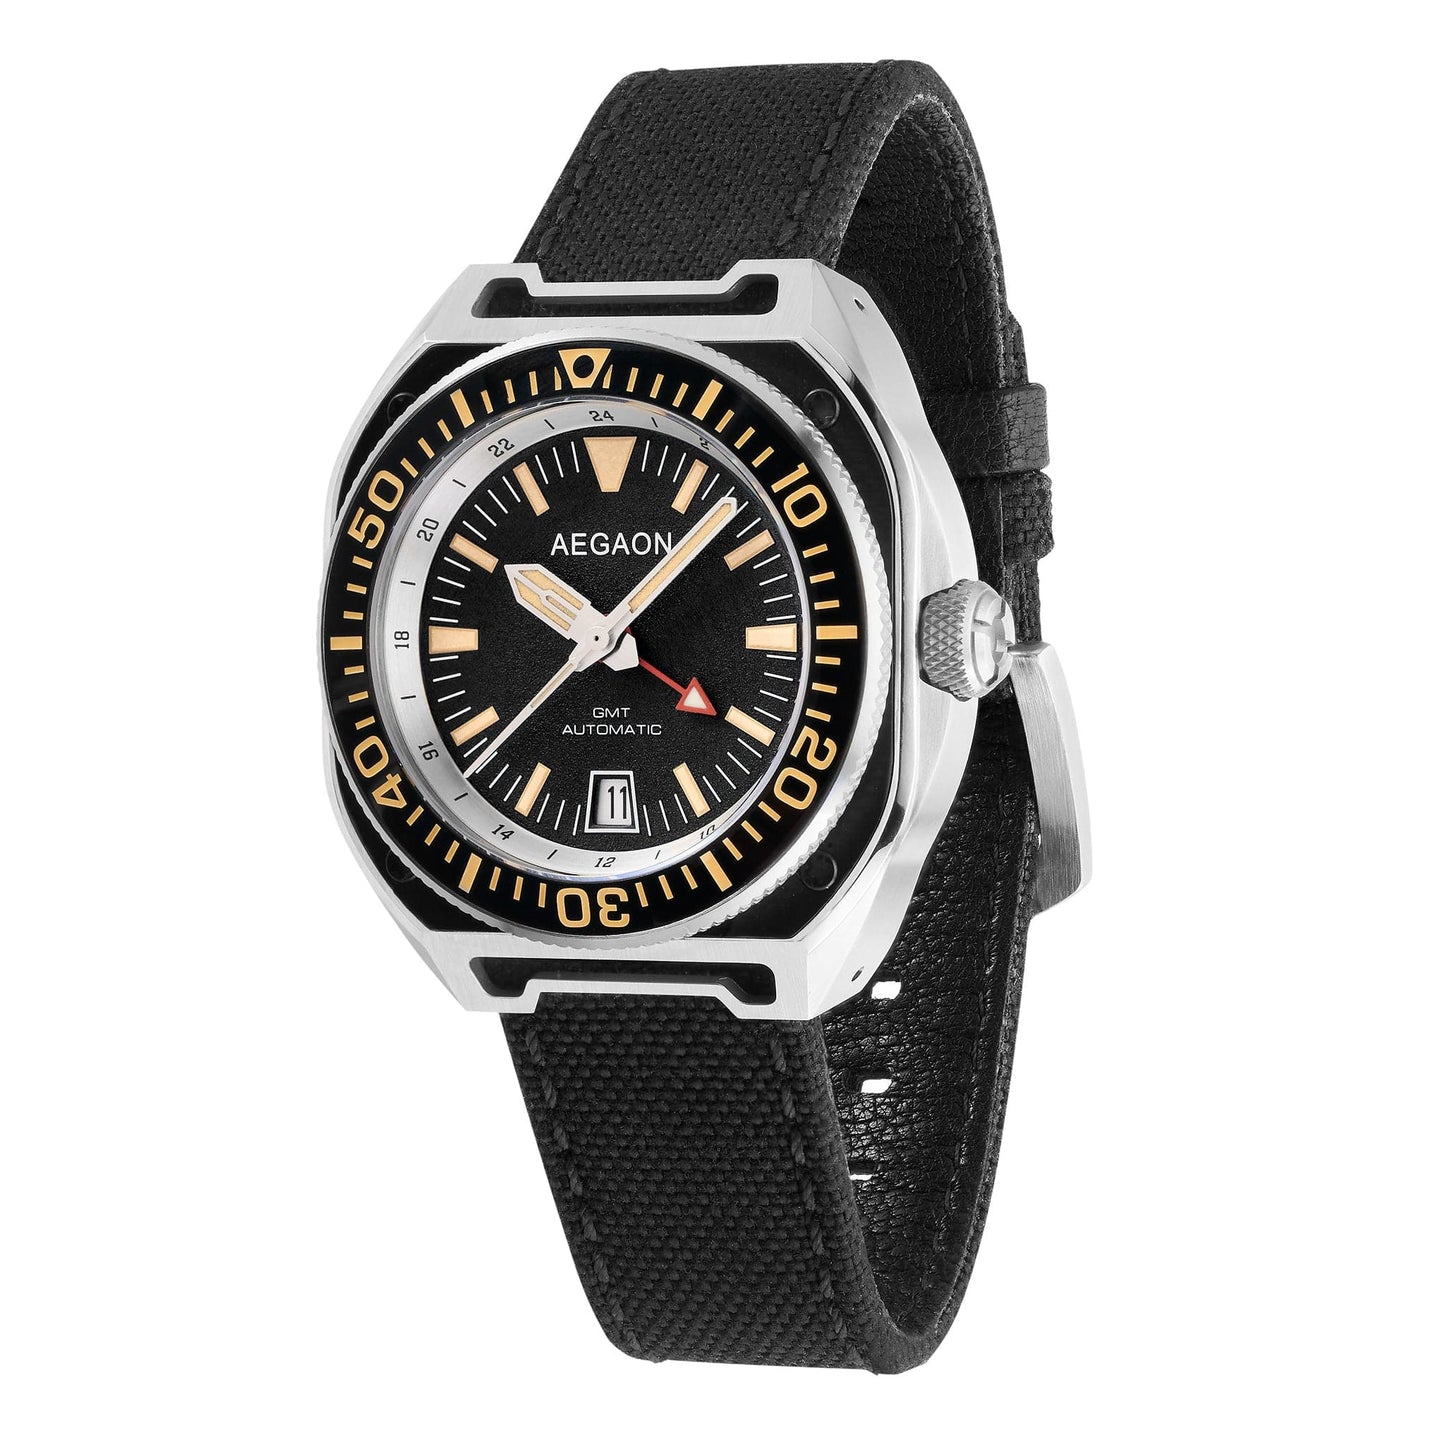 "TEMPTATION III" GMT Automatic Dive Watch (Black)